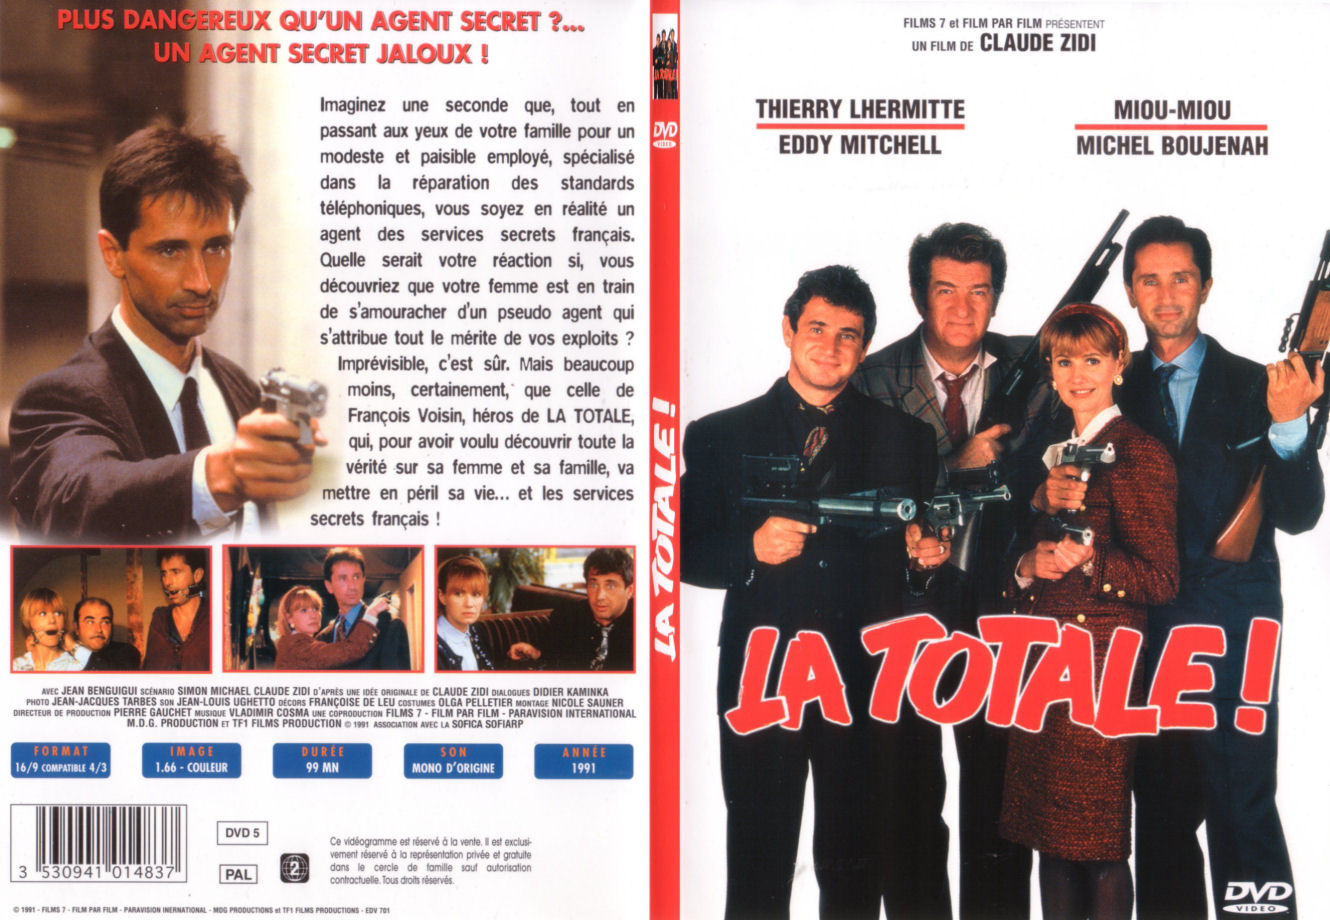 Jaquette DVD La totale - SLIM